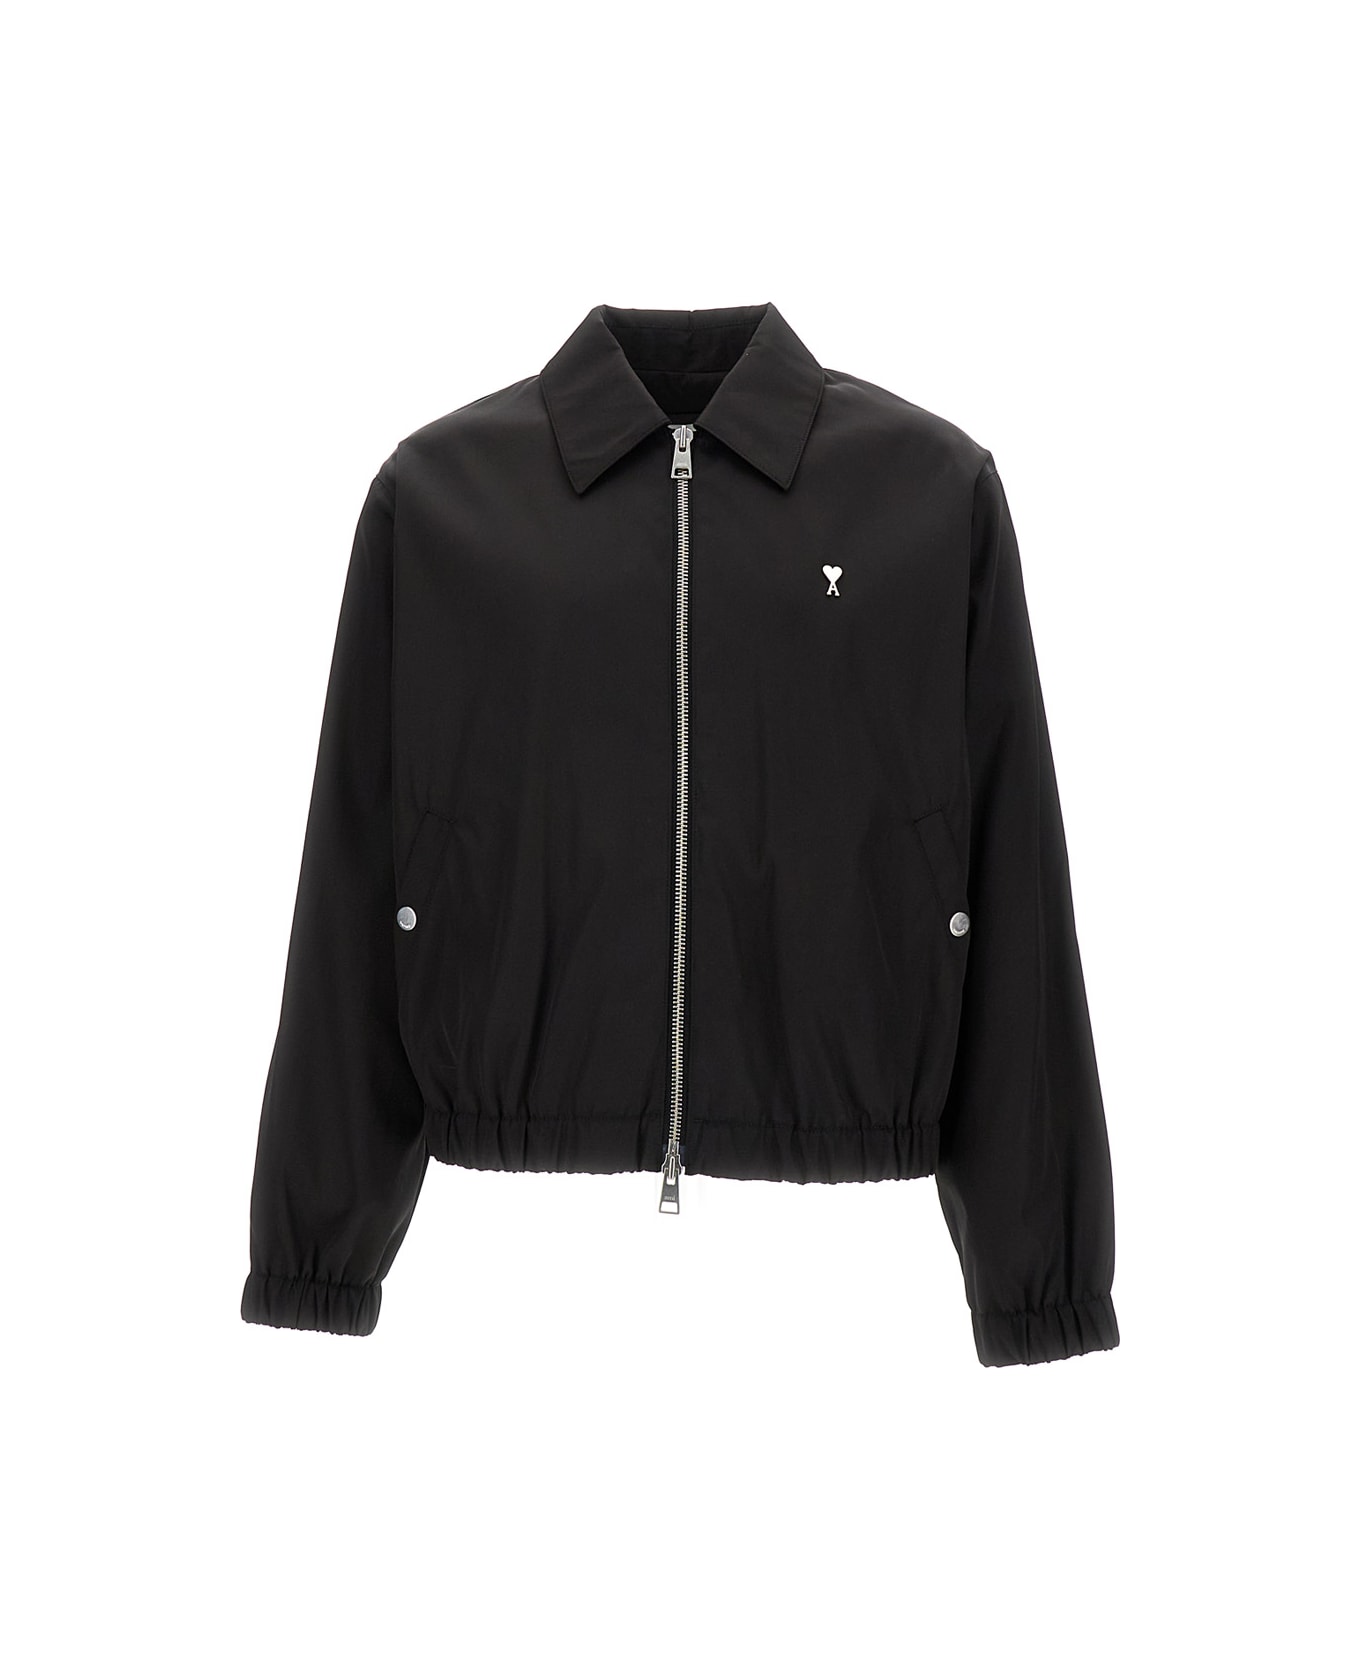 Ami Alexandre Mattiussi Black Jacket With Adc Logo In Cotton Blend Man - Black ジャケット